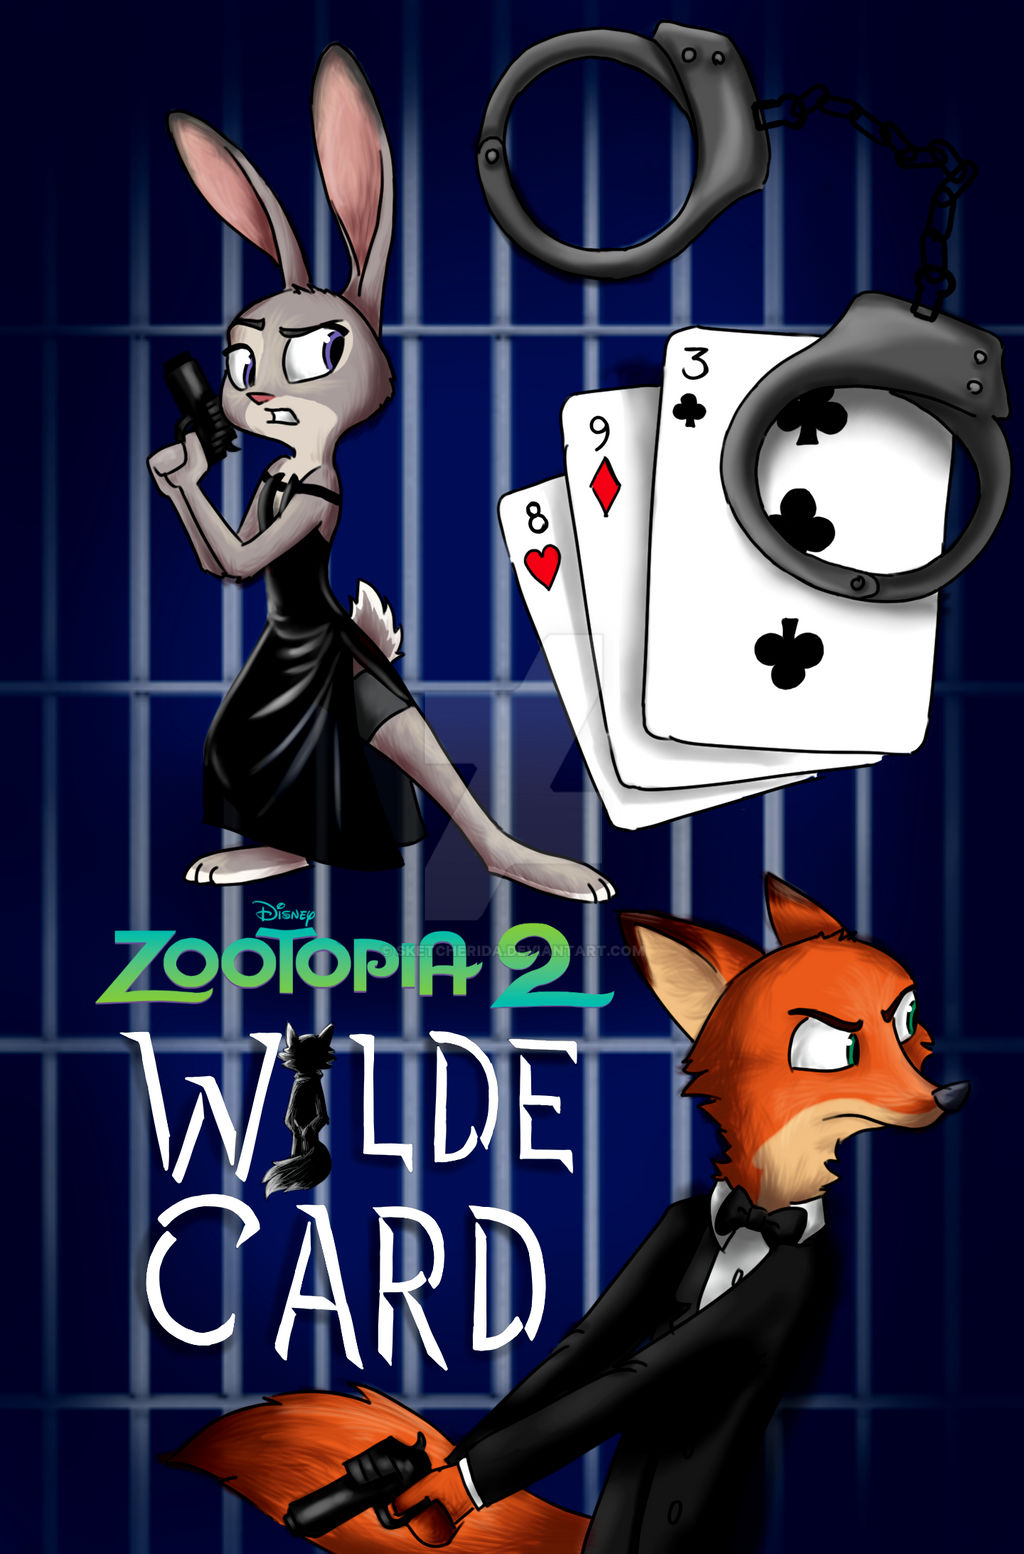 Zootopia 2: Wilde Card by SketcherIda on DeviantArt